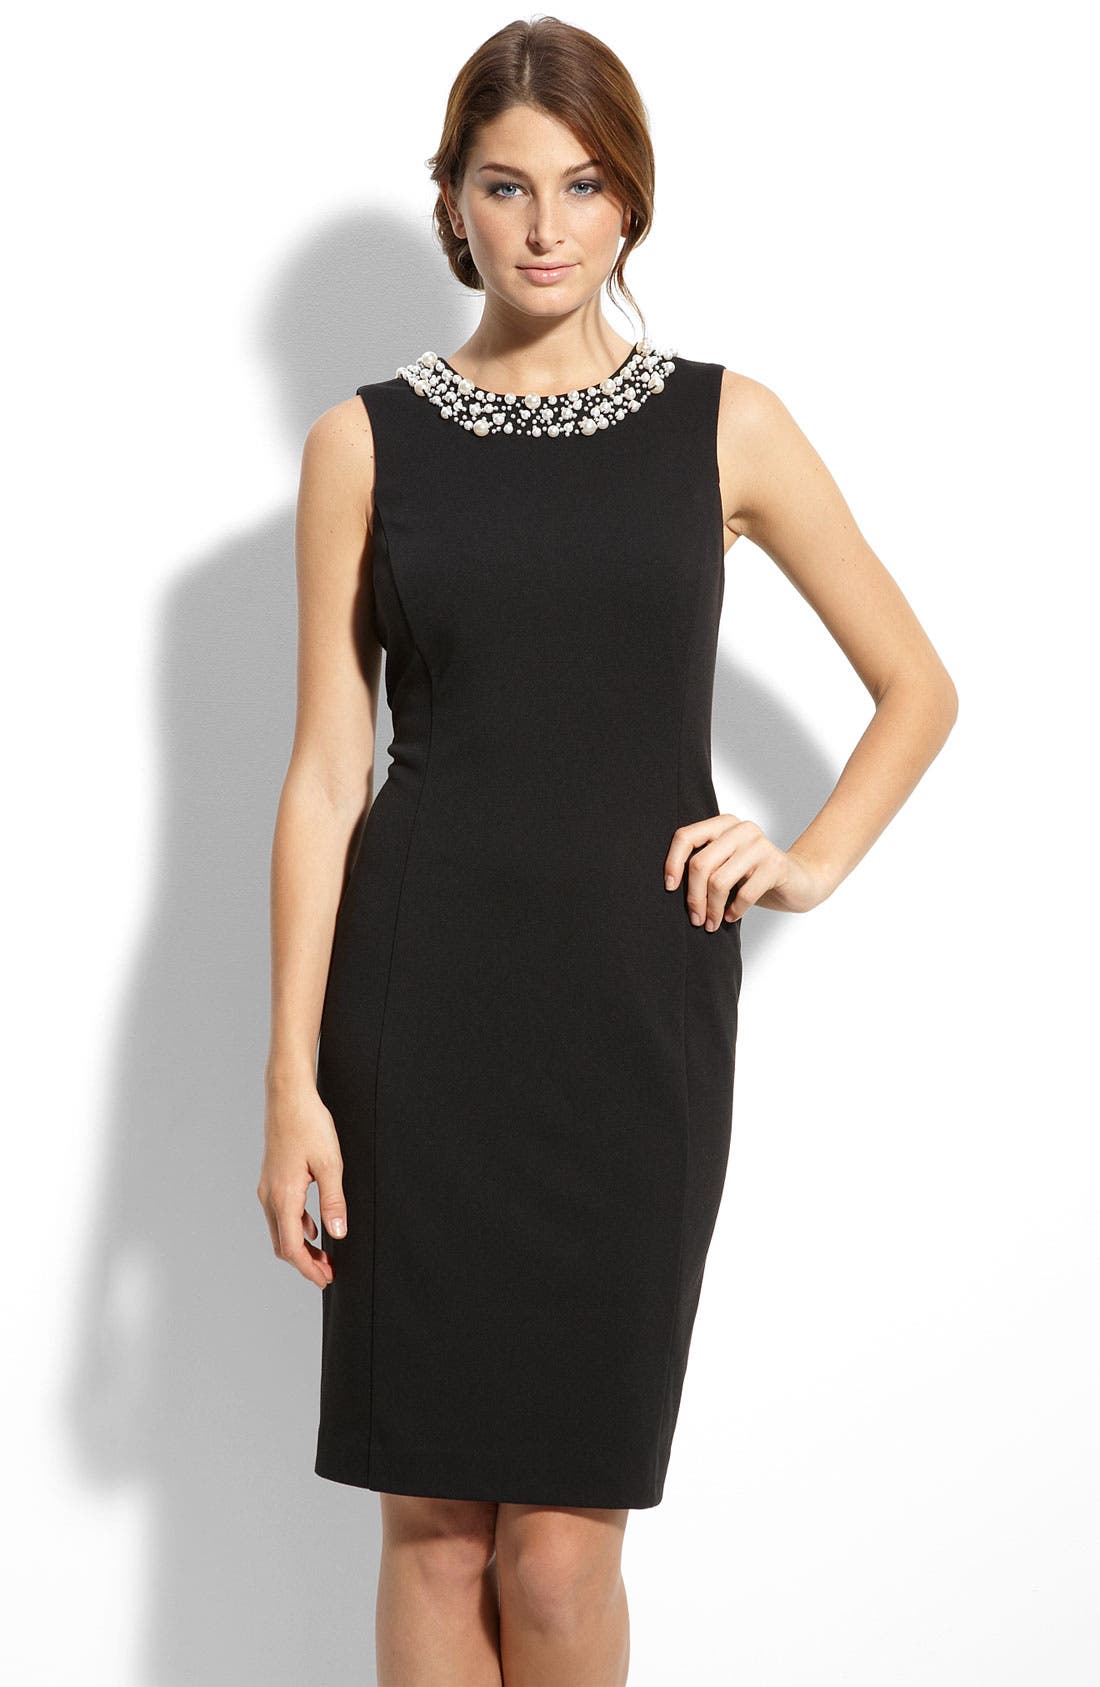 black dress with pearls on neckline